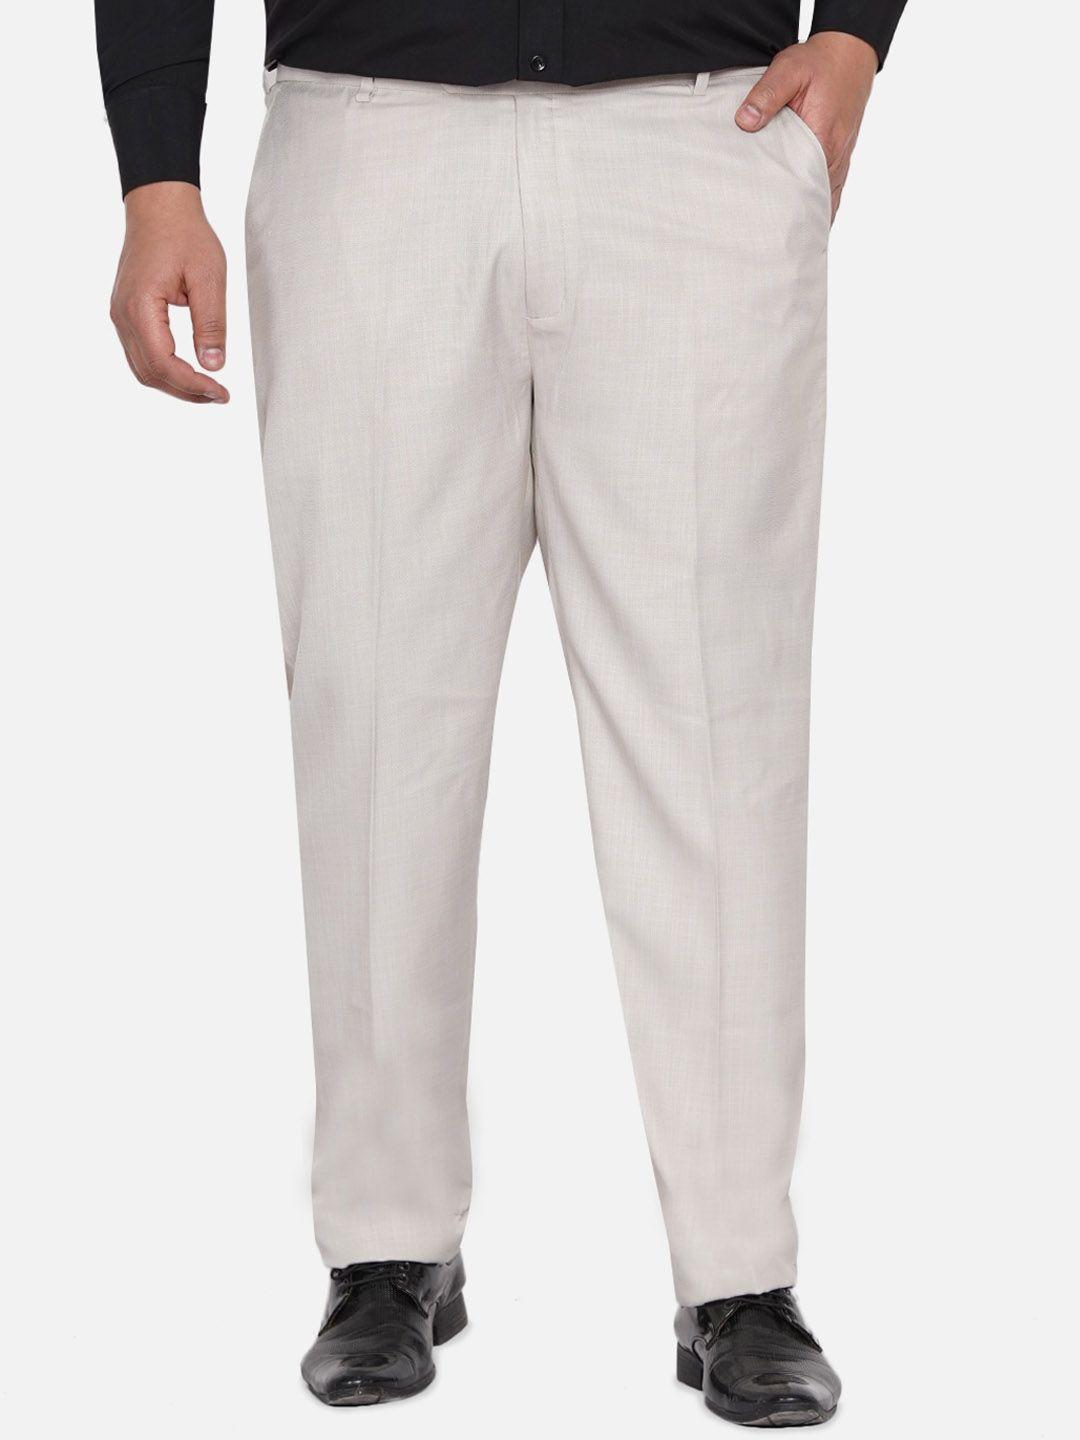 john-pride-men-plus-size-mid-rise-plain-cotton-formal-trousers